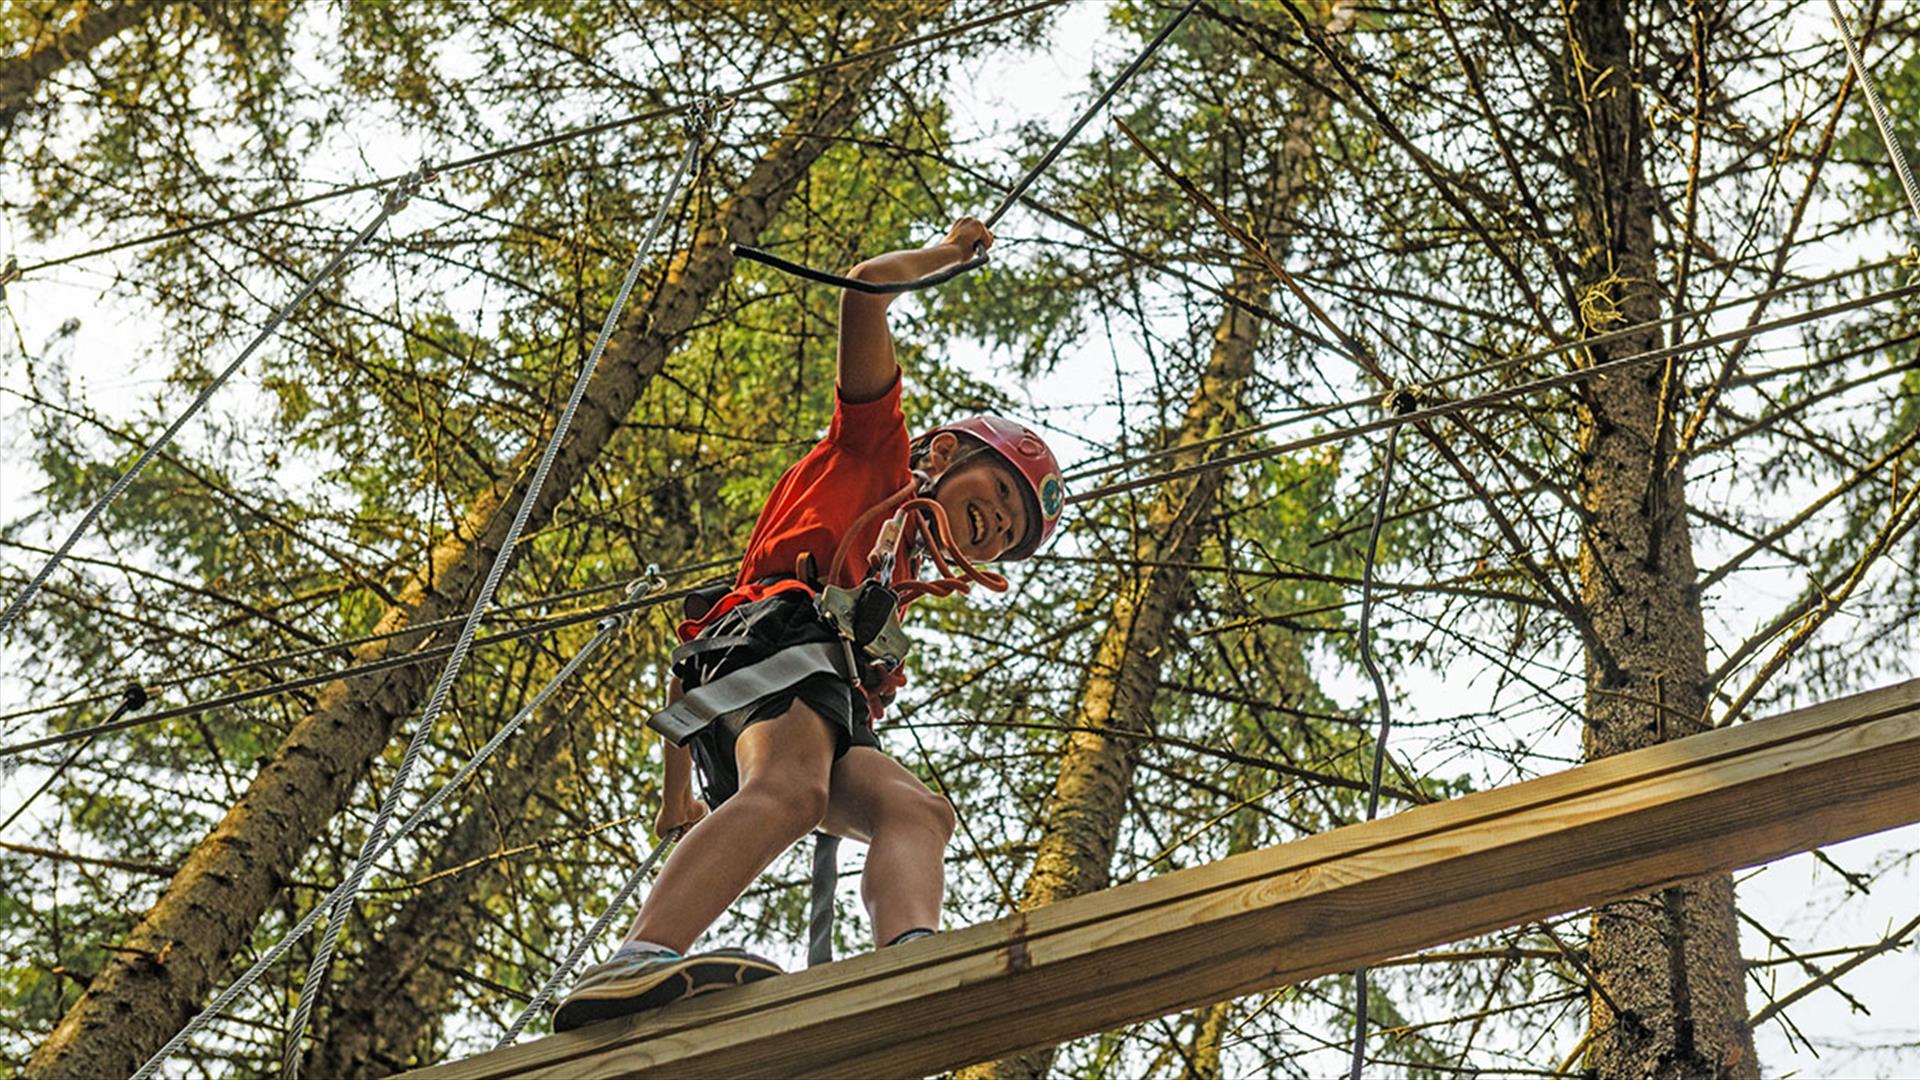 Gjøvik climbing park - Fun in the trees